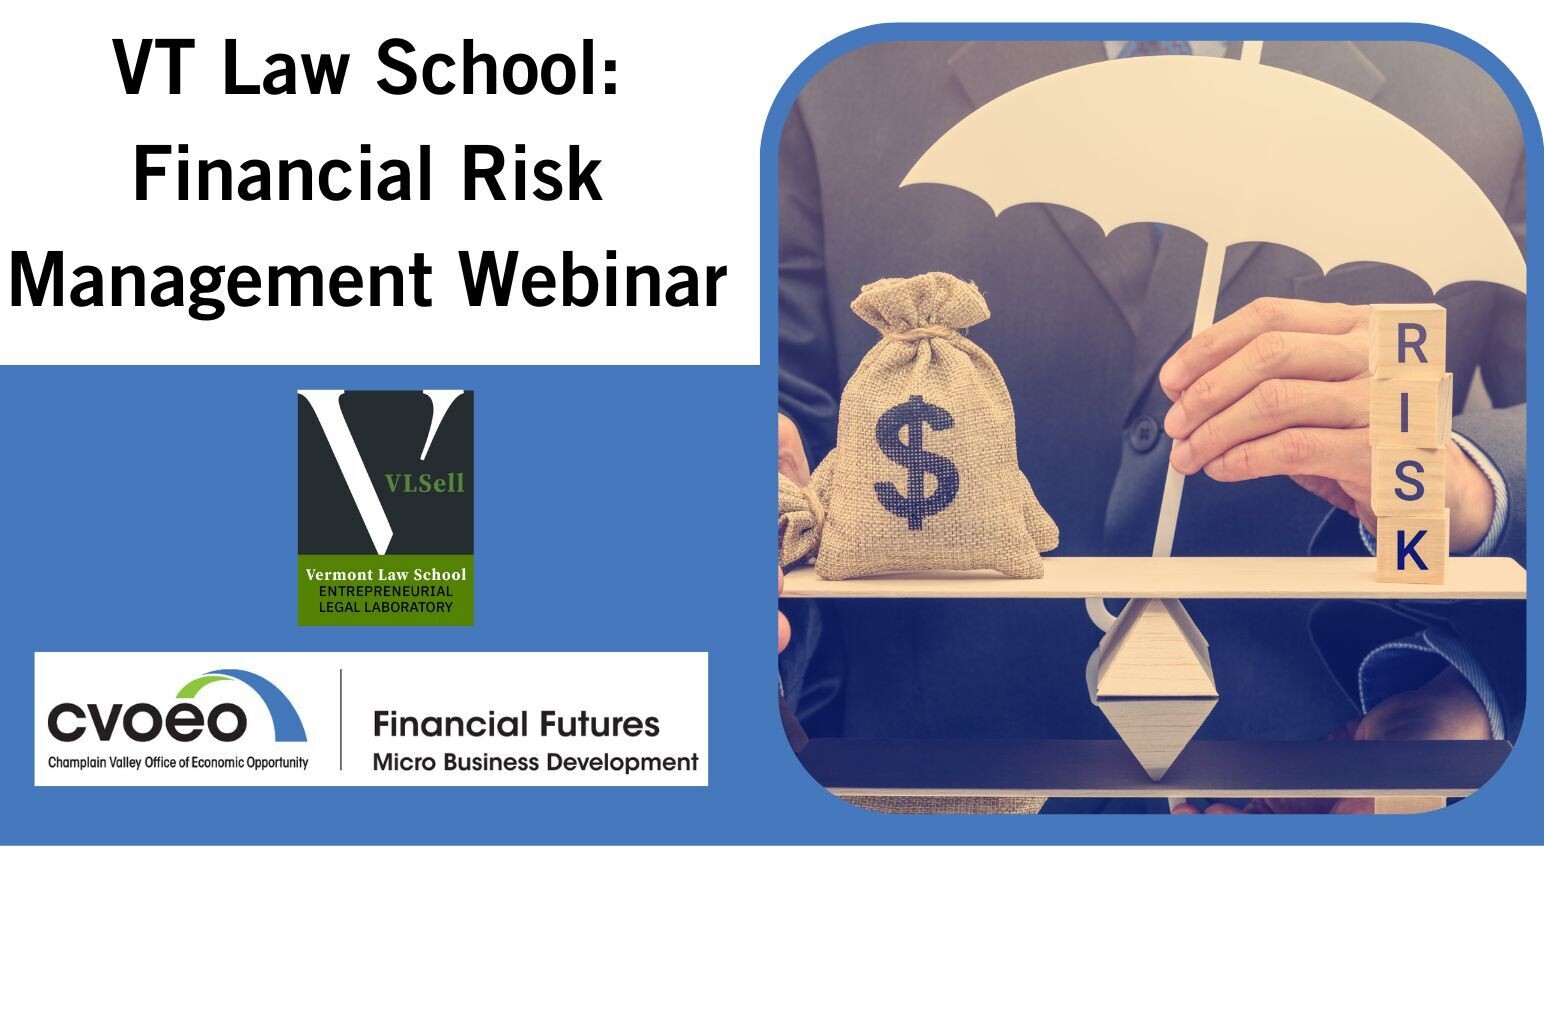 VT Law School: Financial Risk Management Webinar